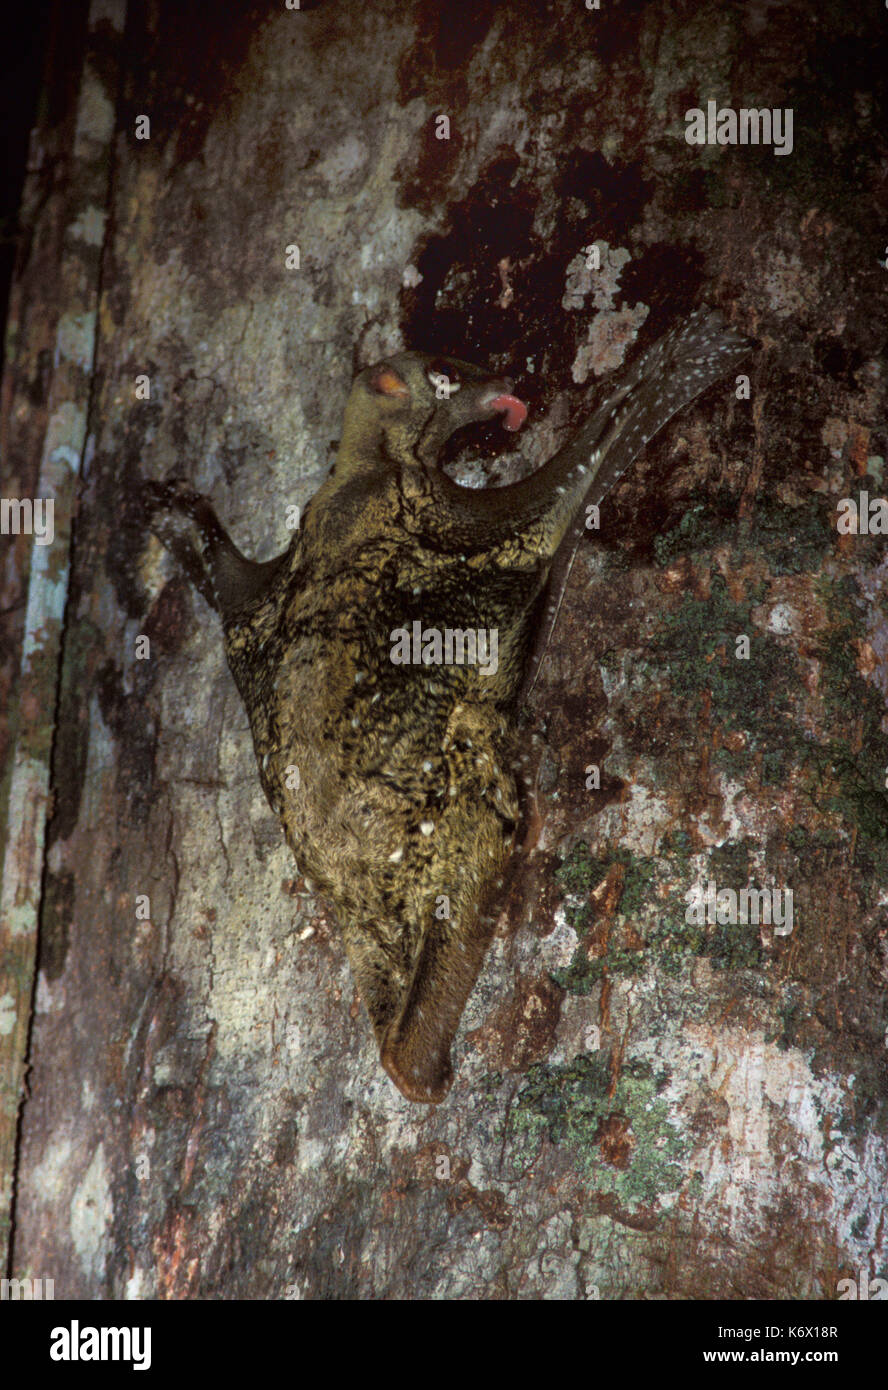 Colugo or Flying Lemur, Cynocephalus variegatus, Danuum Valley, Sabah, on tree licking resin at night Stock Photo